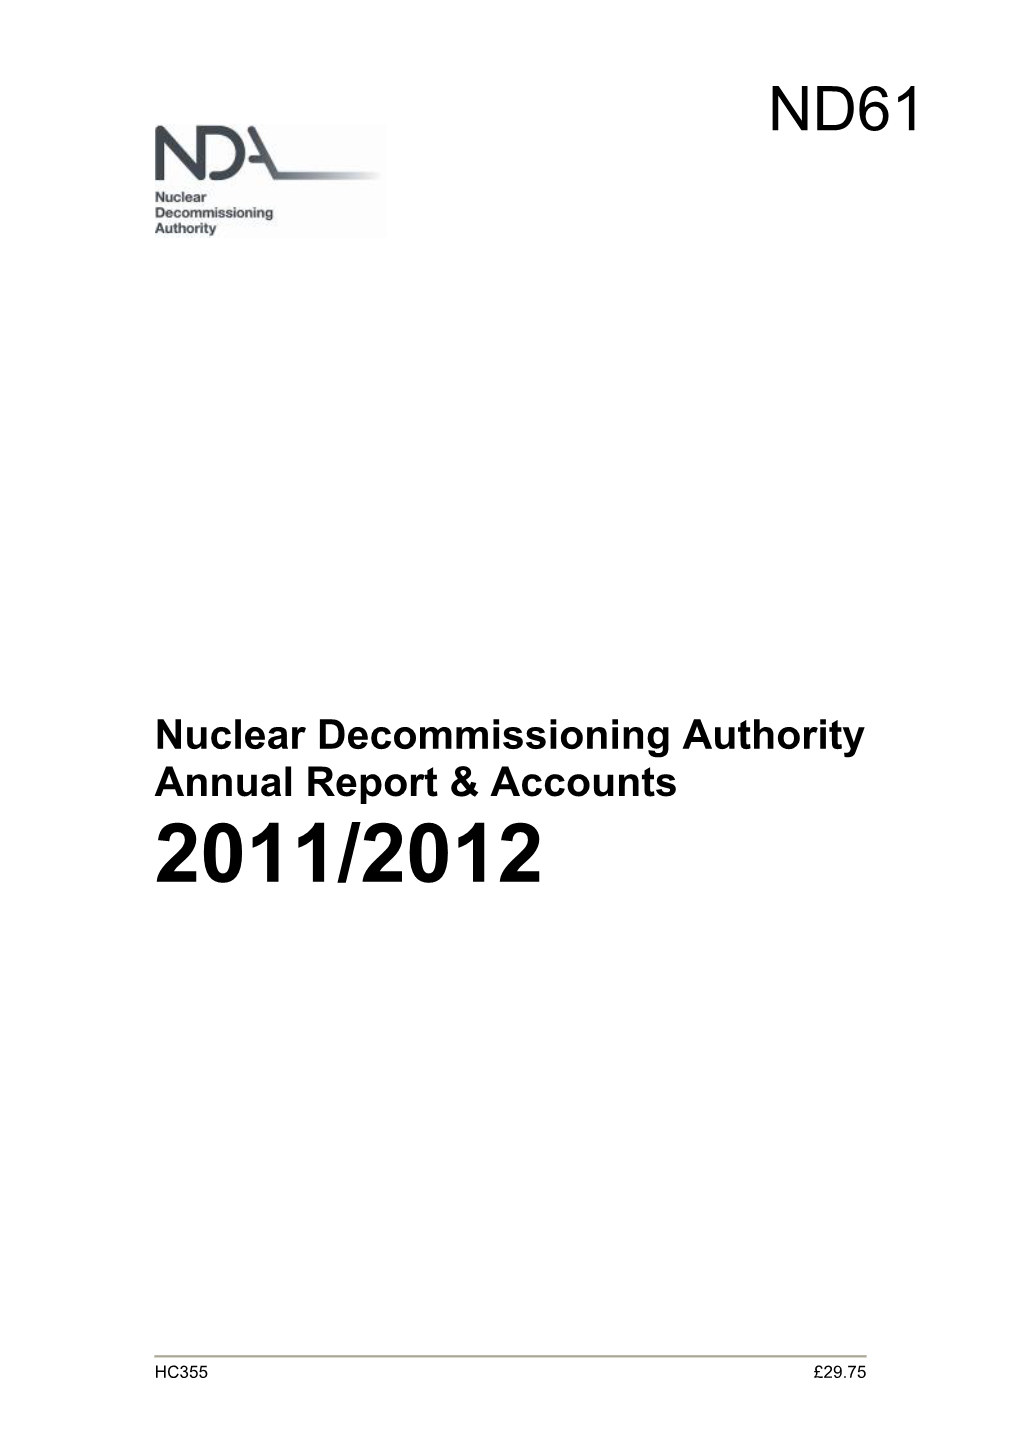 ND61 NDA Annual Report and Accounts